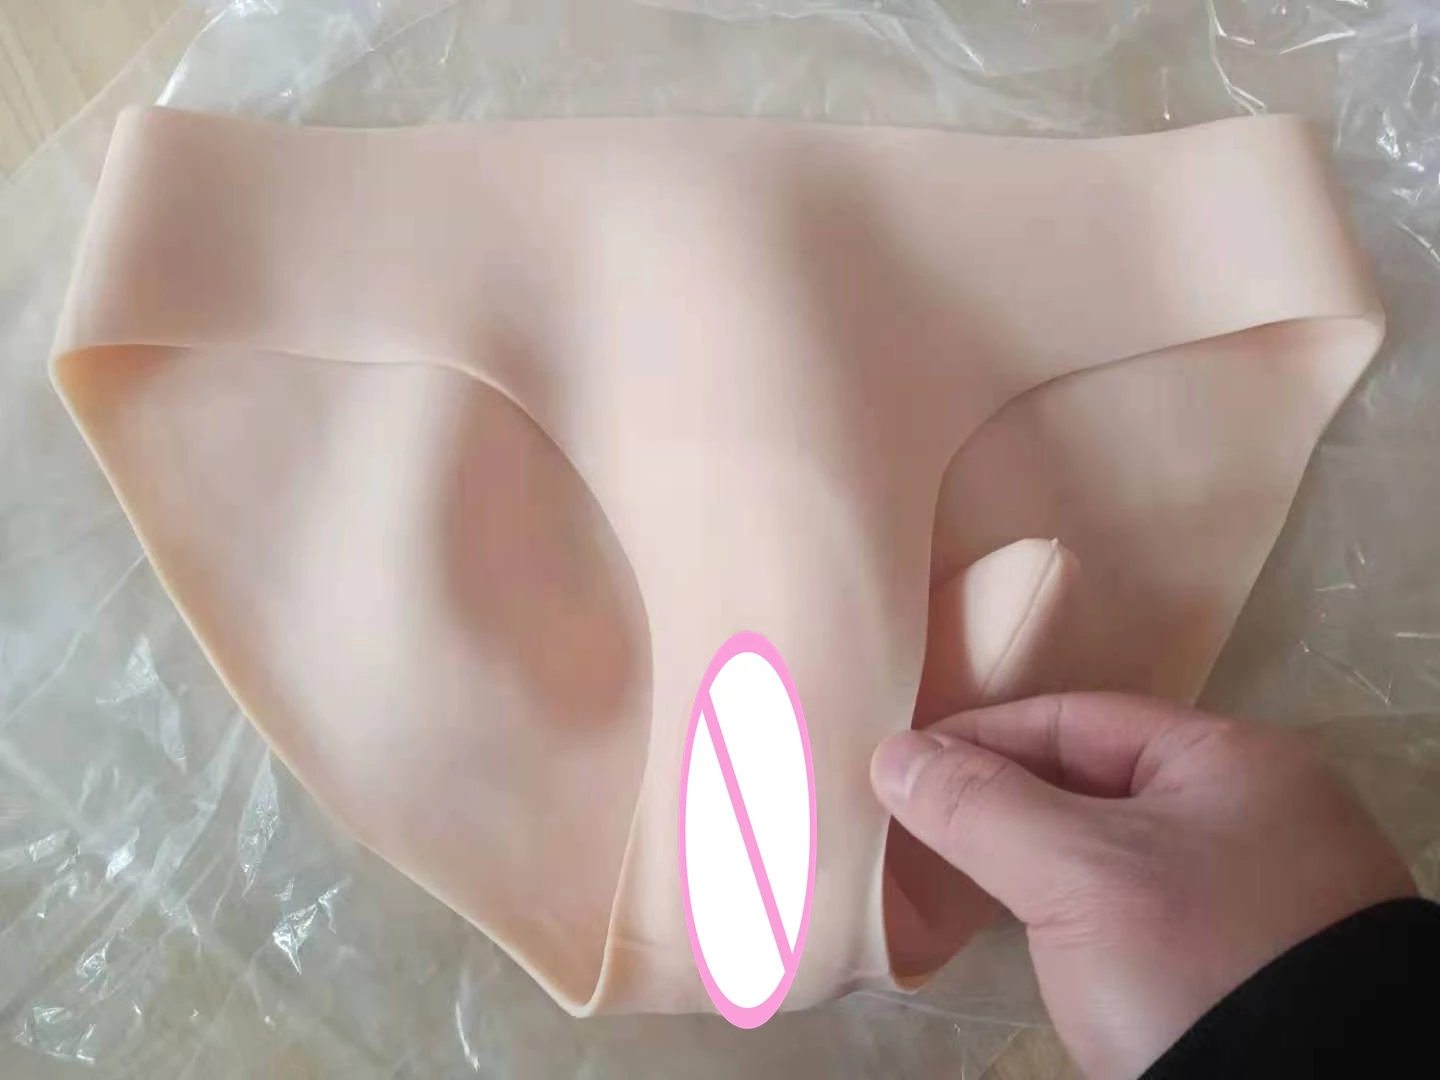 Silicone Fake Vagina Underwear Panties Men Penetratable Vagina Boxer Briefs for Crossdresser Transgender Shemale Gaff Soft Tits